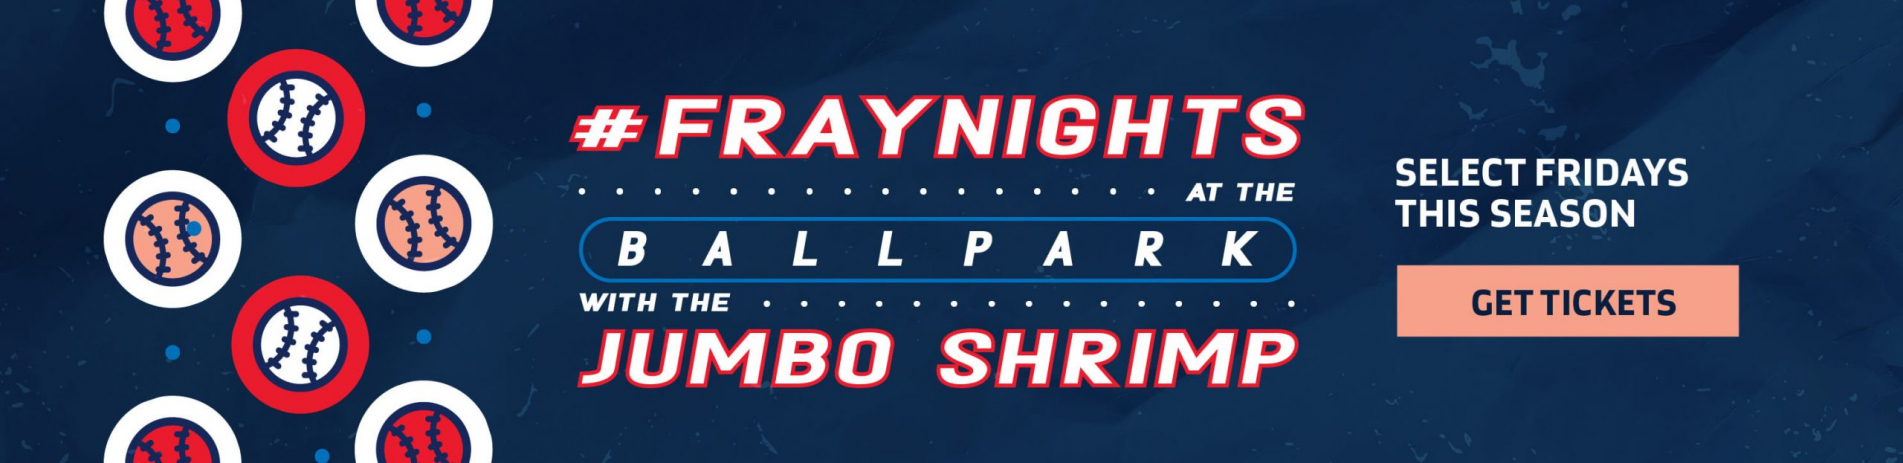 #FrayNights with the Jumbo Shrimp